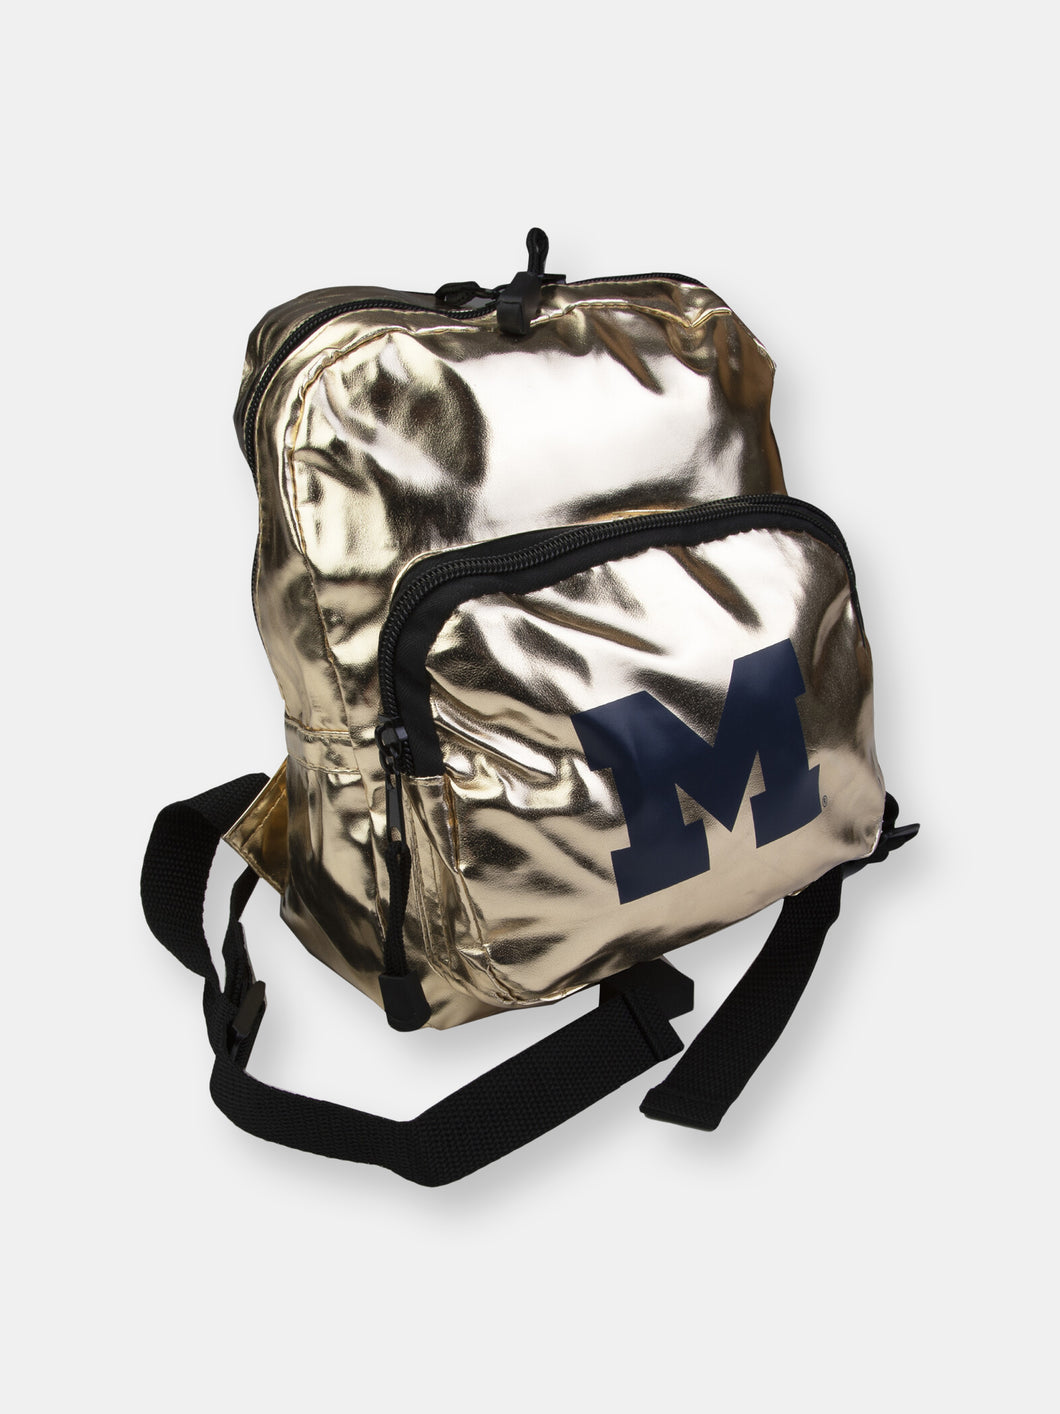 Officially Licensed NCAA Spotlight Metallic Mini Backpack